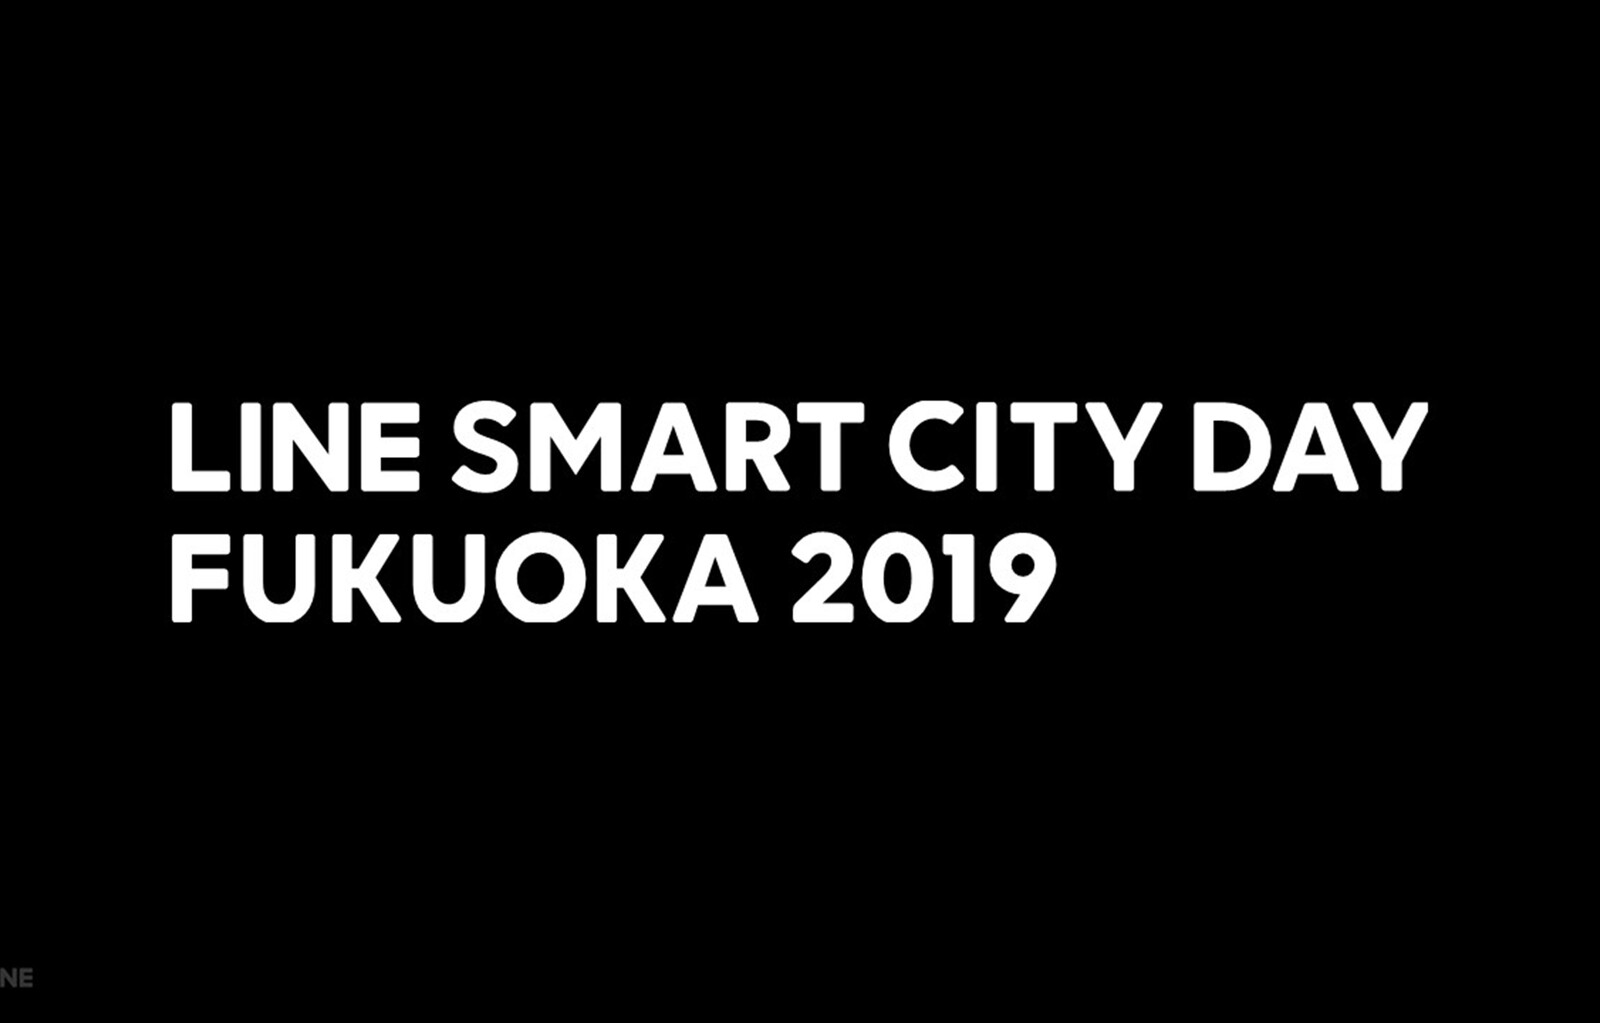 「LINE SMART CITY DAY FUKUOKA 2019」 初開催のご案内 サムネイル画像